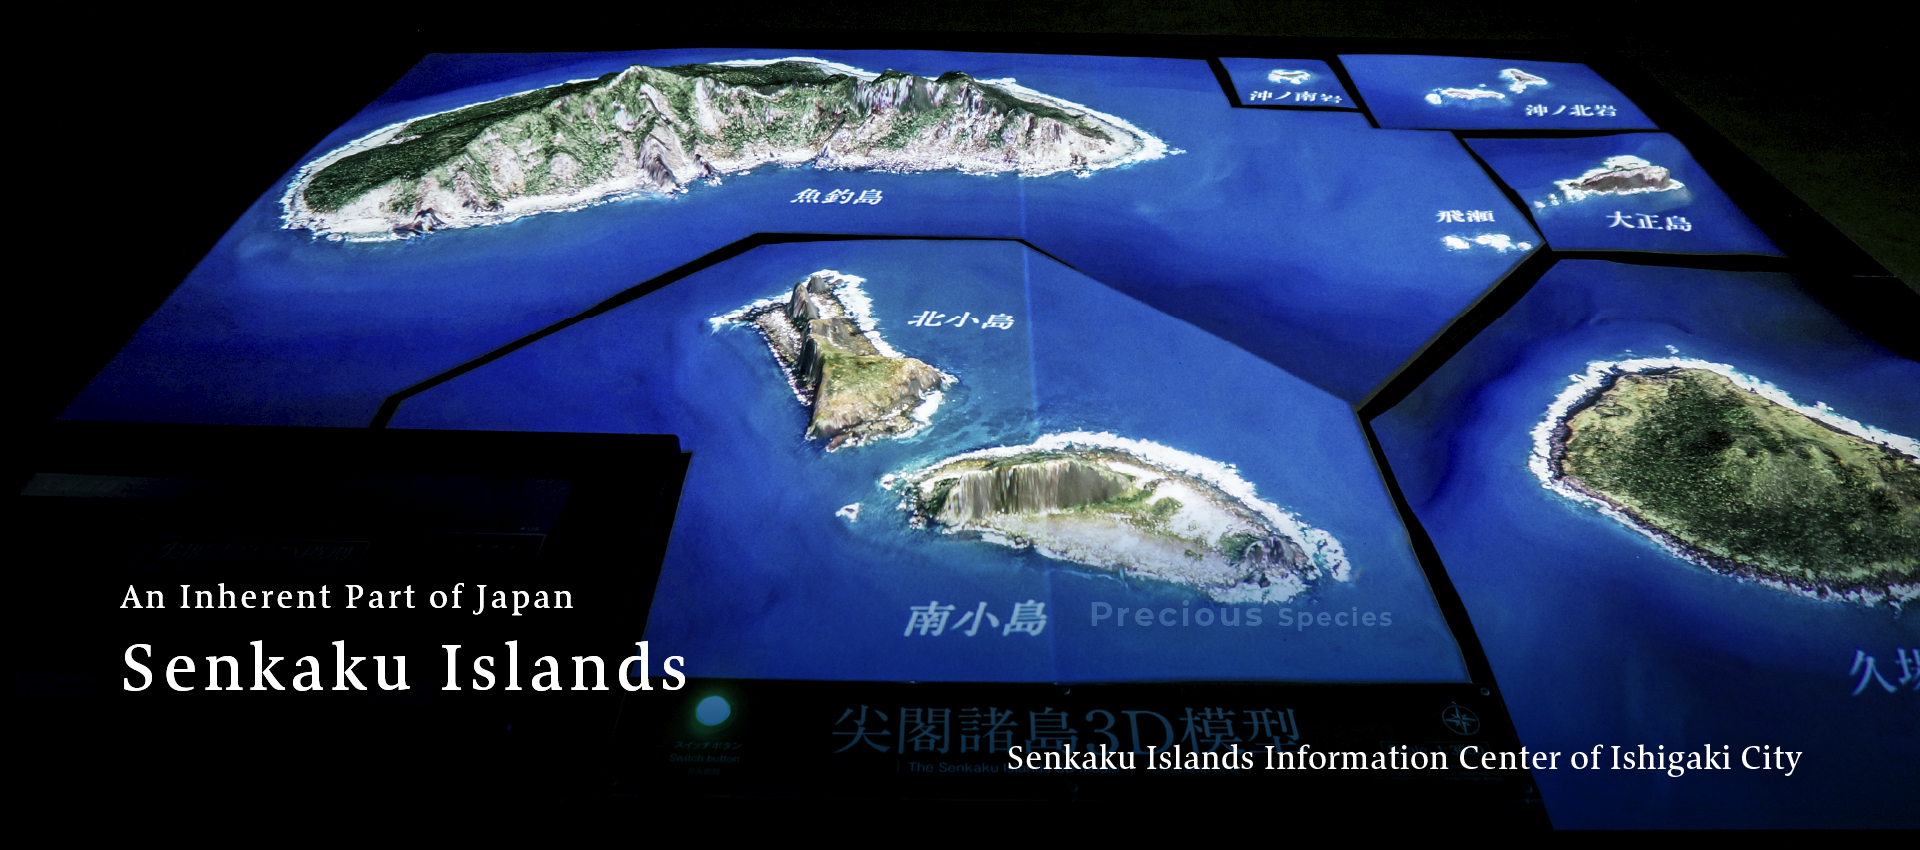 Senkaku Islands Information Center of Ishigaki City